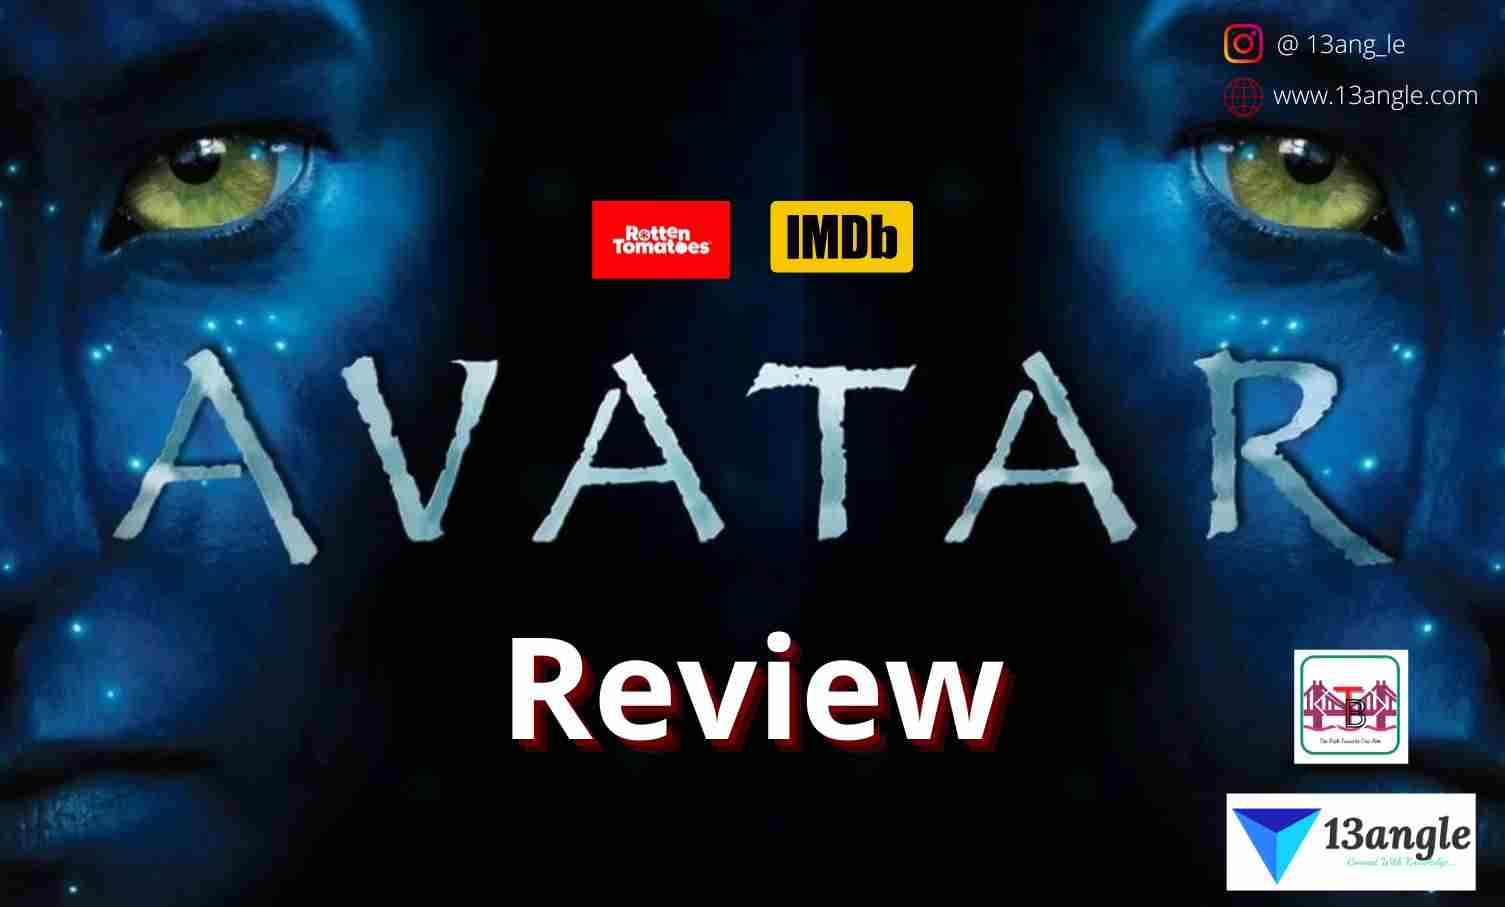 Avatar movie Review- The Bridge (13angle)